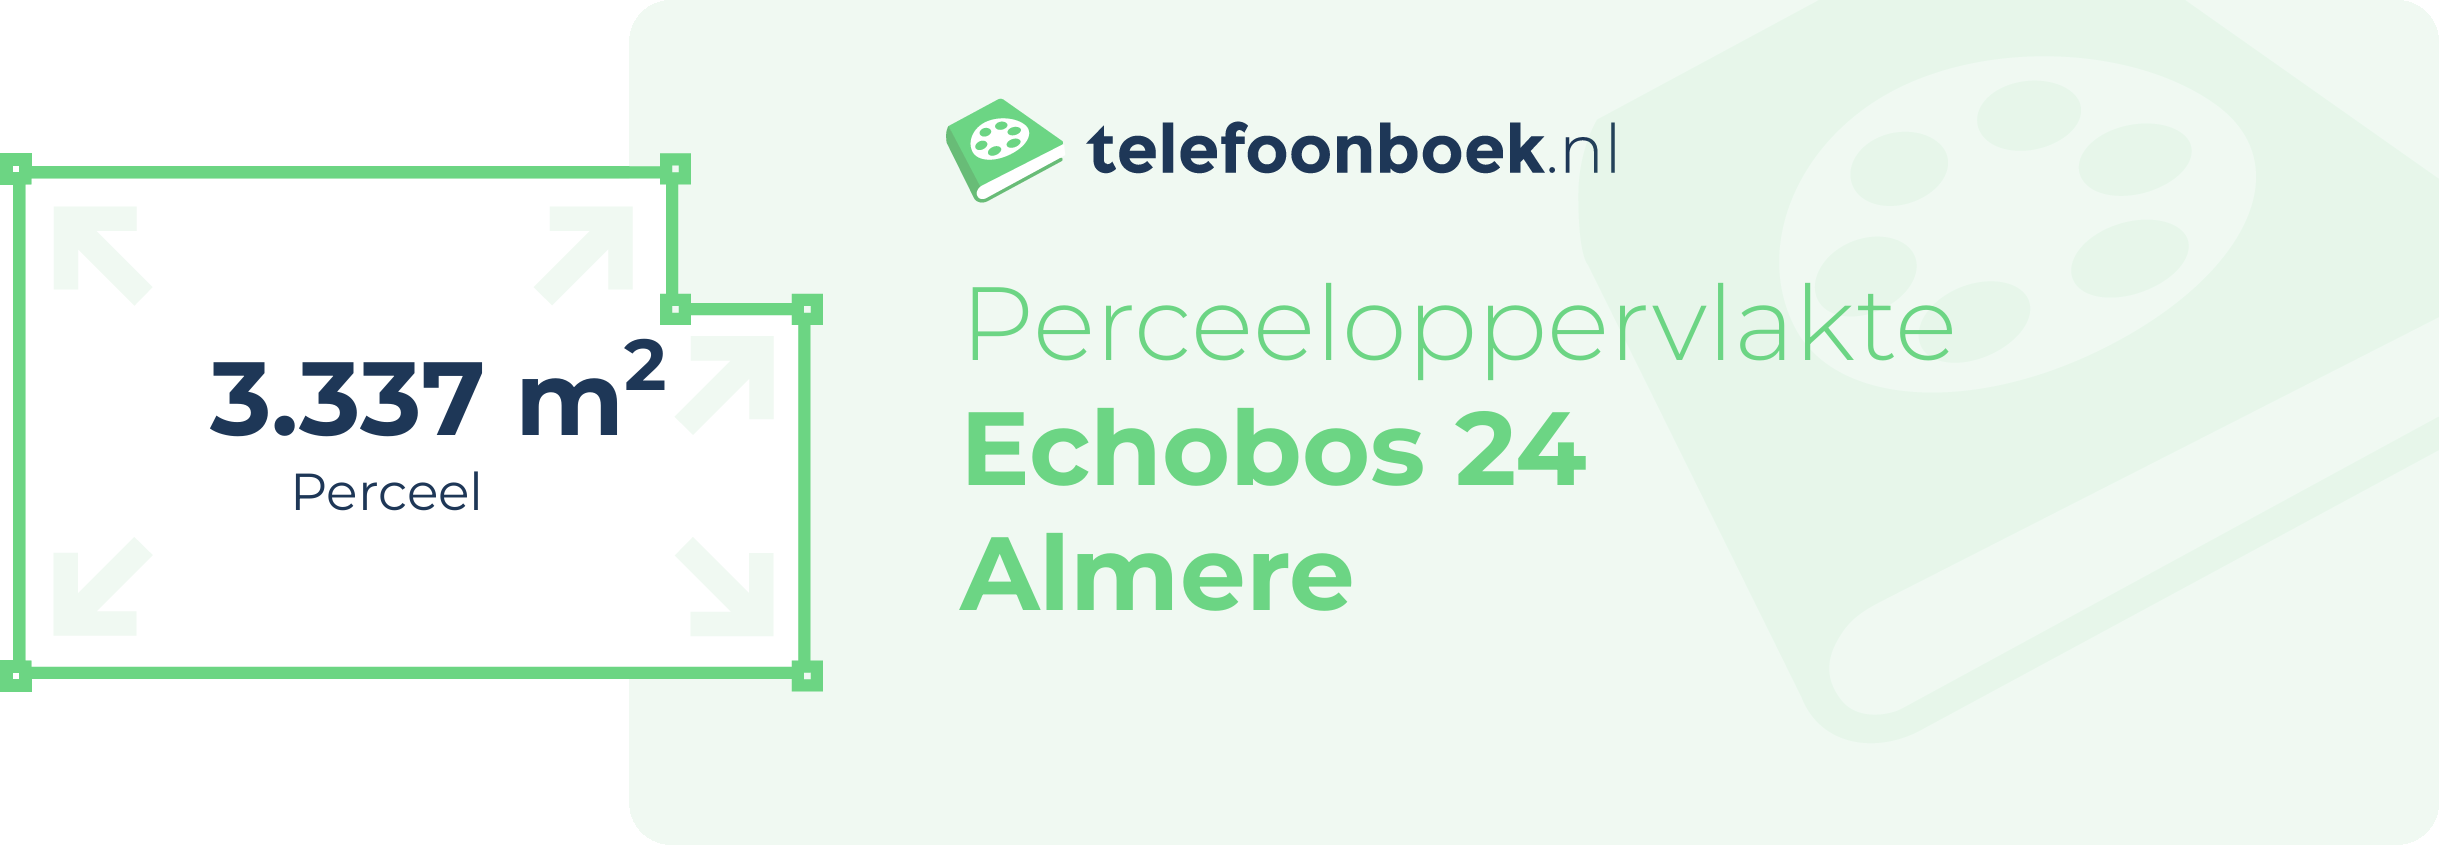 Perceeloppervlakte Echobos 24 Almere